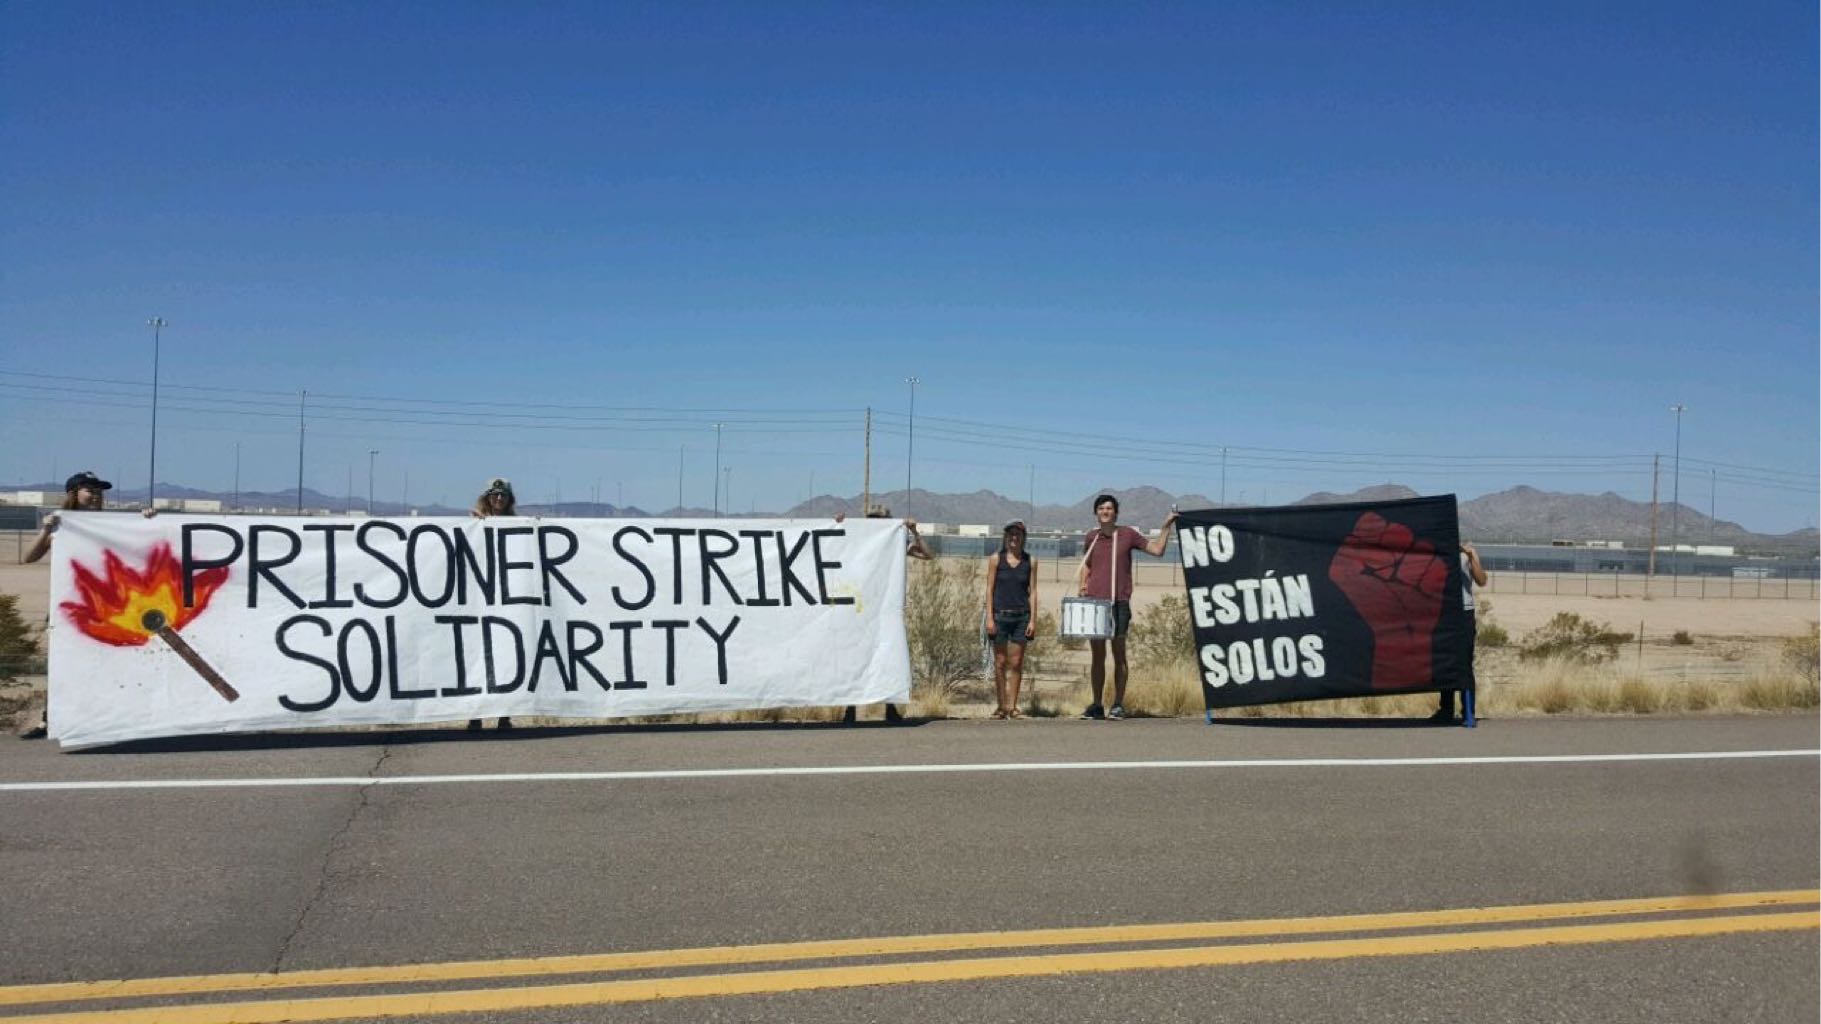 Rally outside of ASPC Lewis near Buckeye, AZ